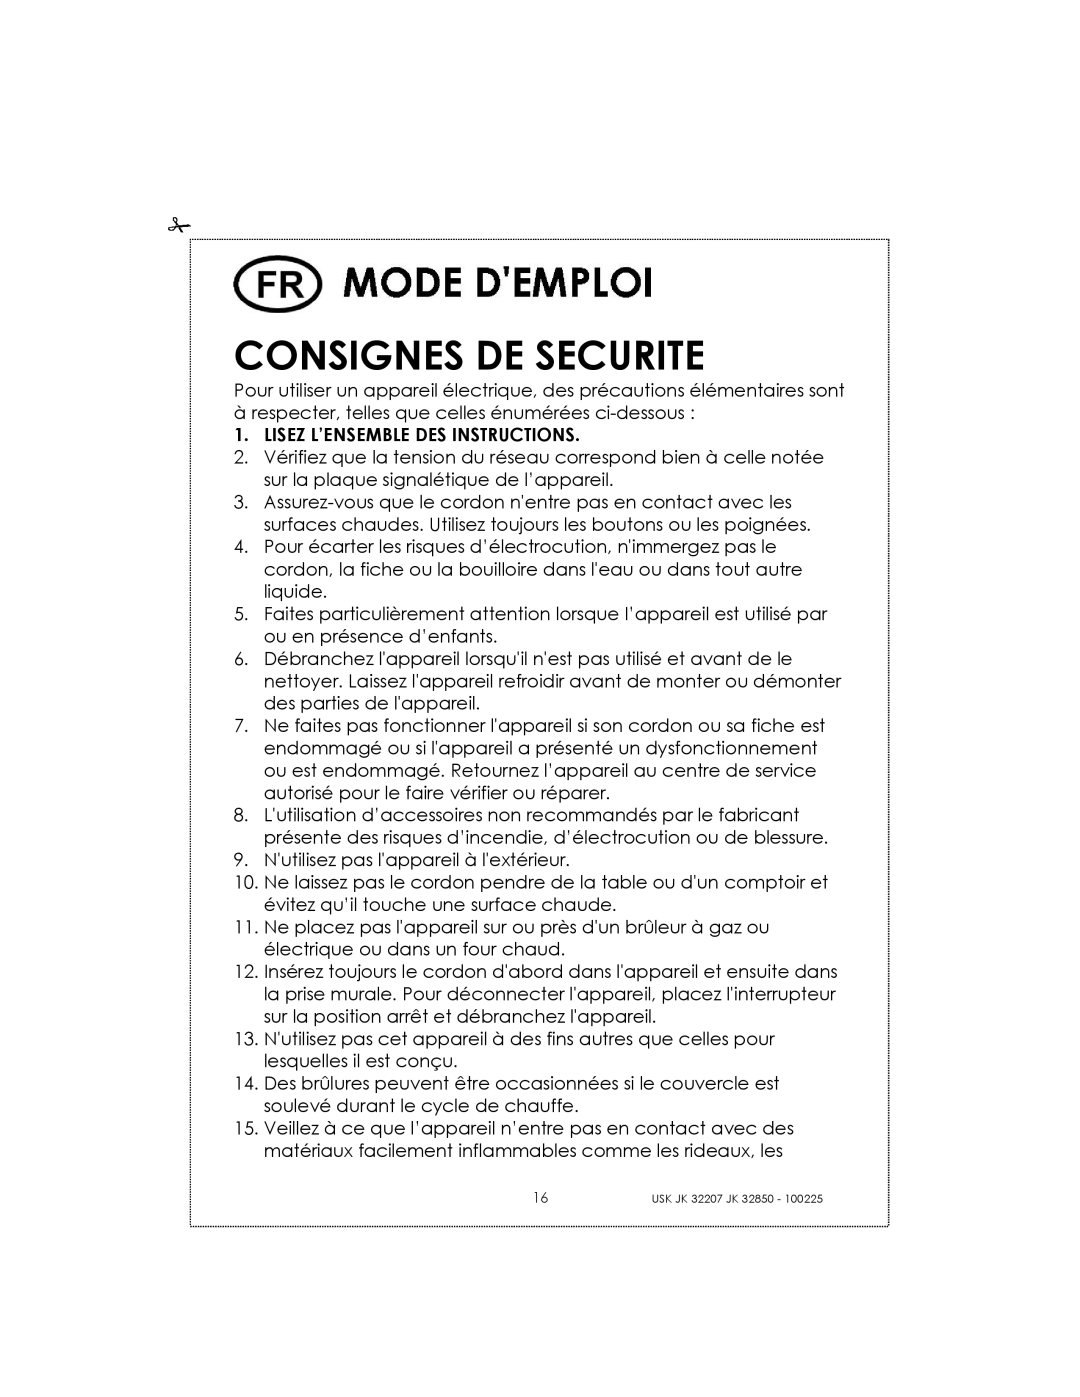 Kalorik USK JK 32850, USK JK 32207 manual Consignes De Securite 